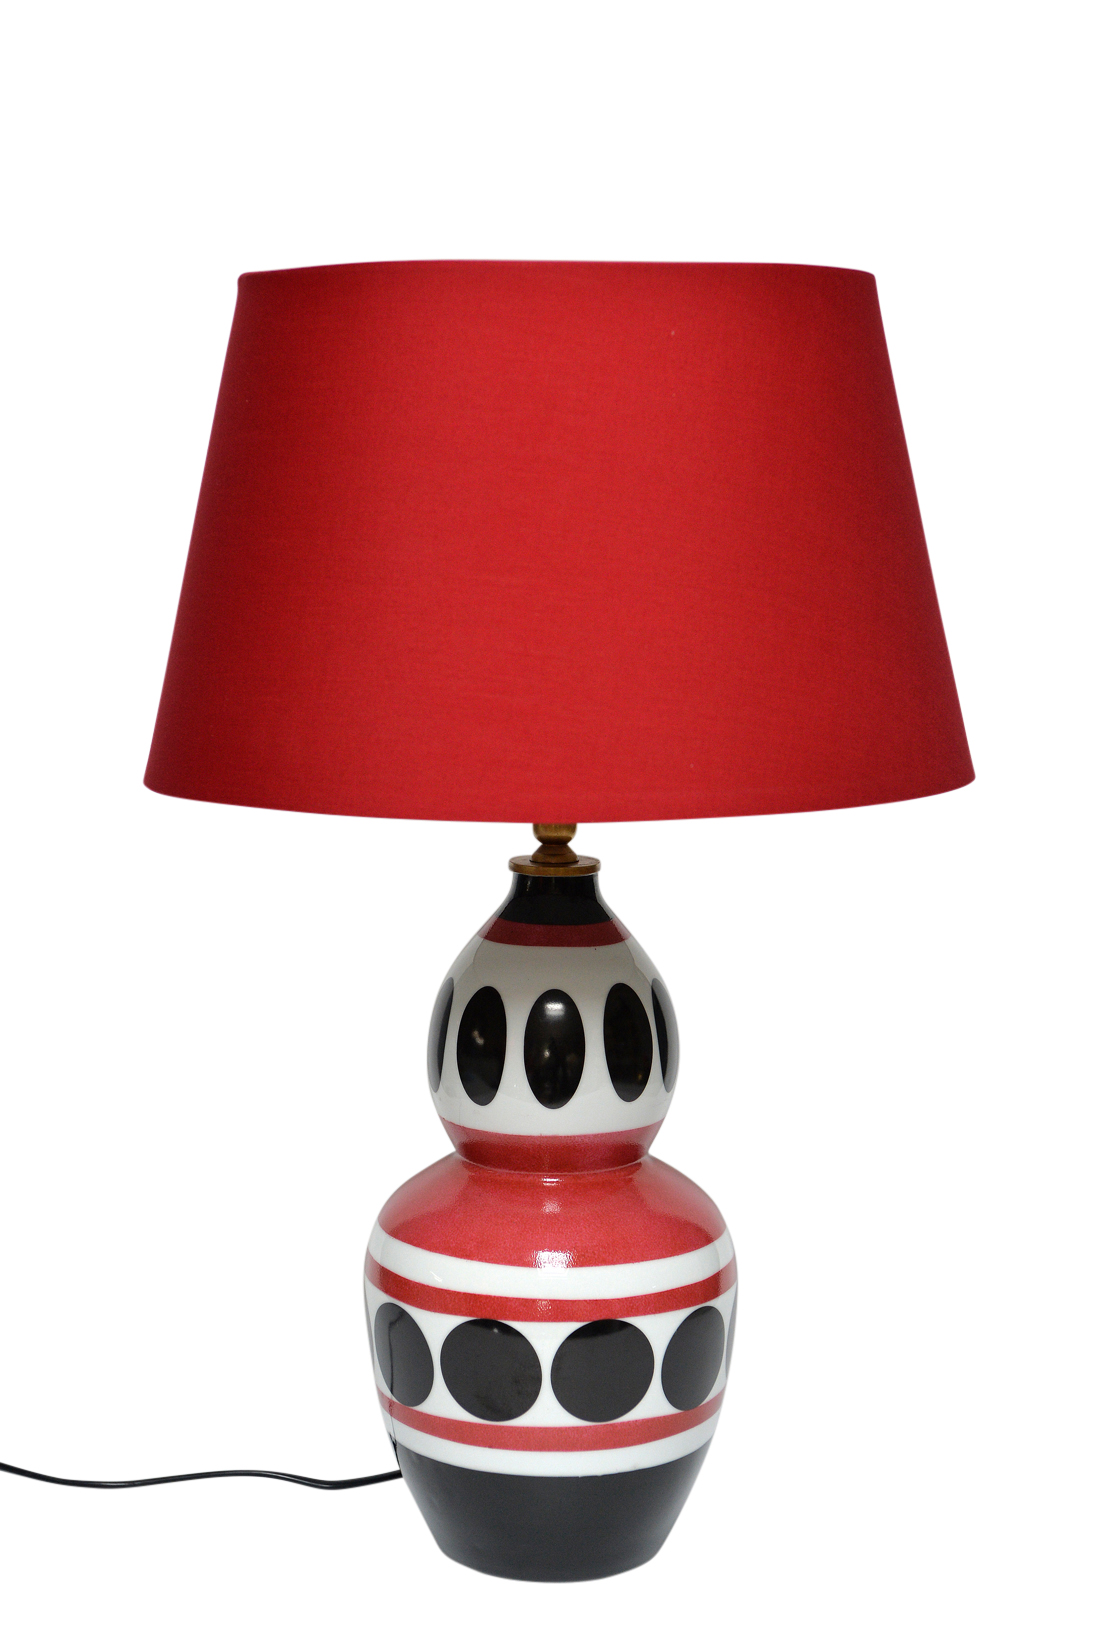 Lamp, £295, L'Atelier Natalia Willmott